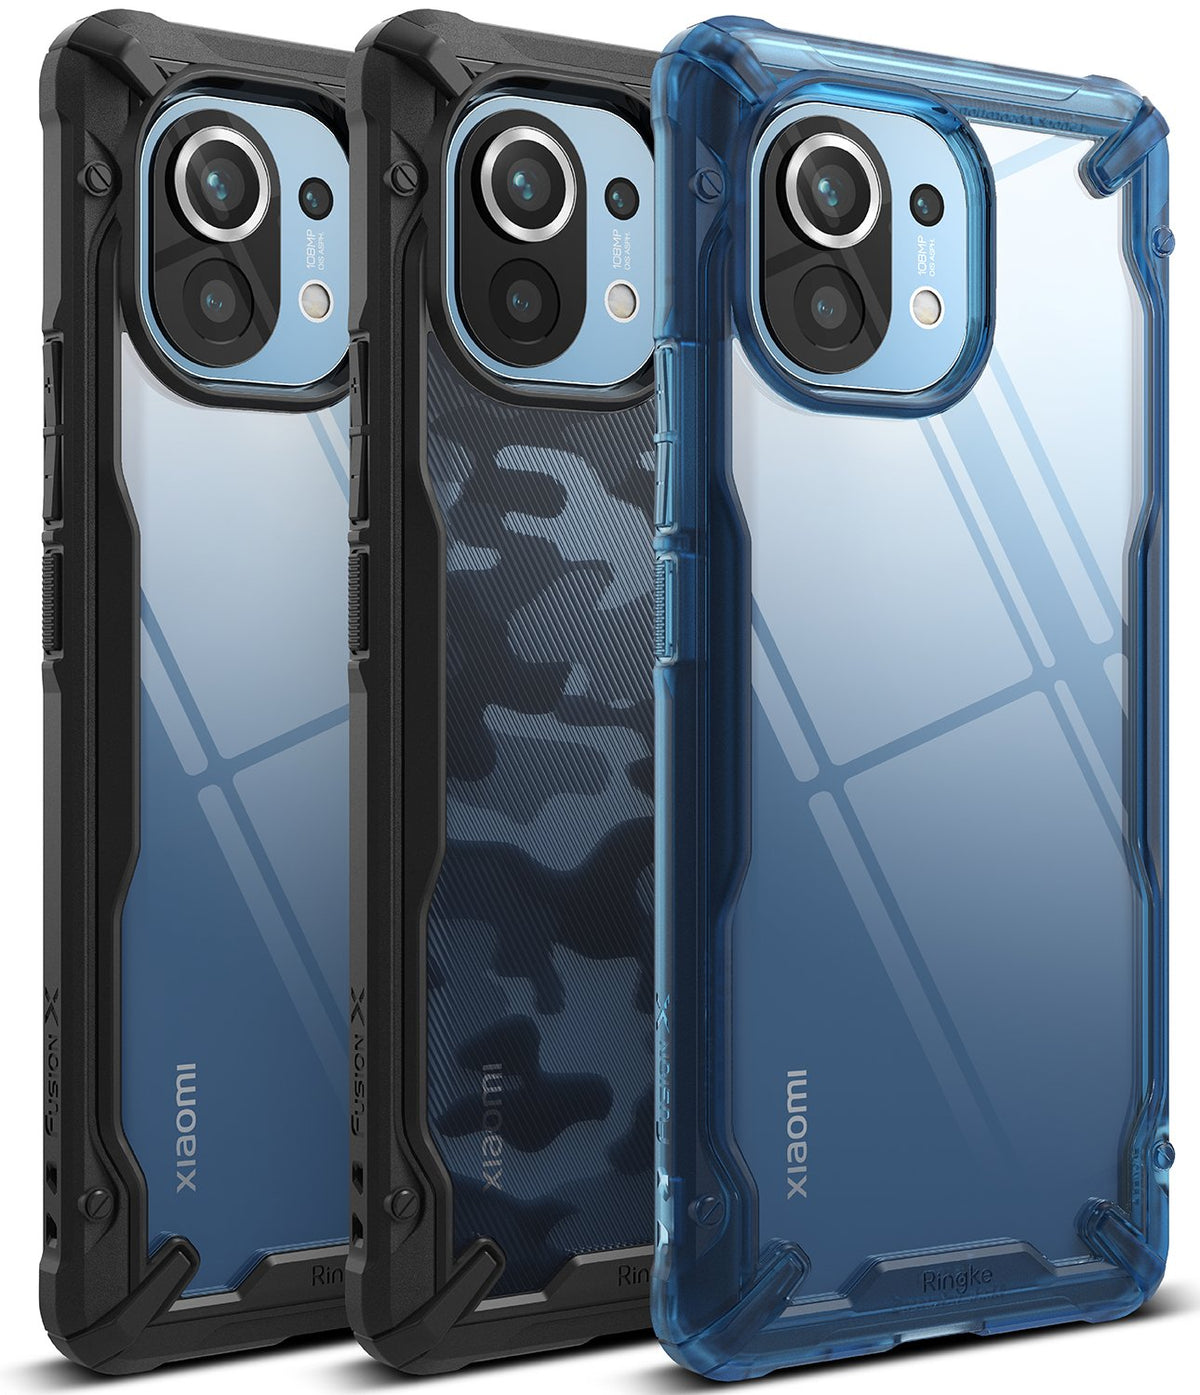 Ringke Fusion-X Xiaomi Mi 11 Case Casing Cover